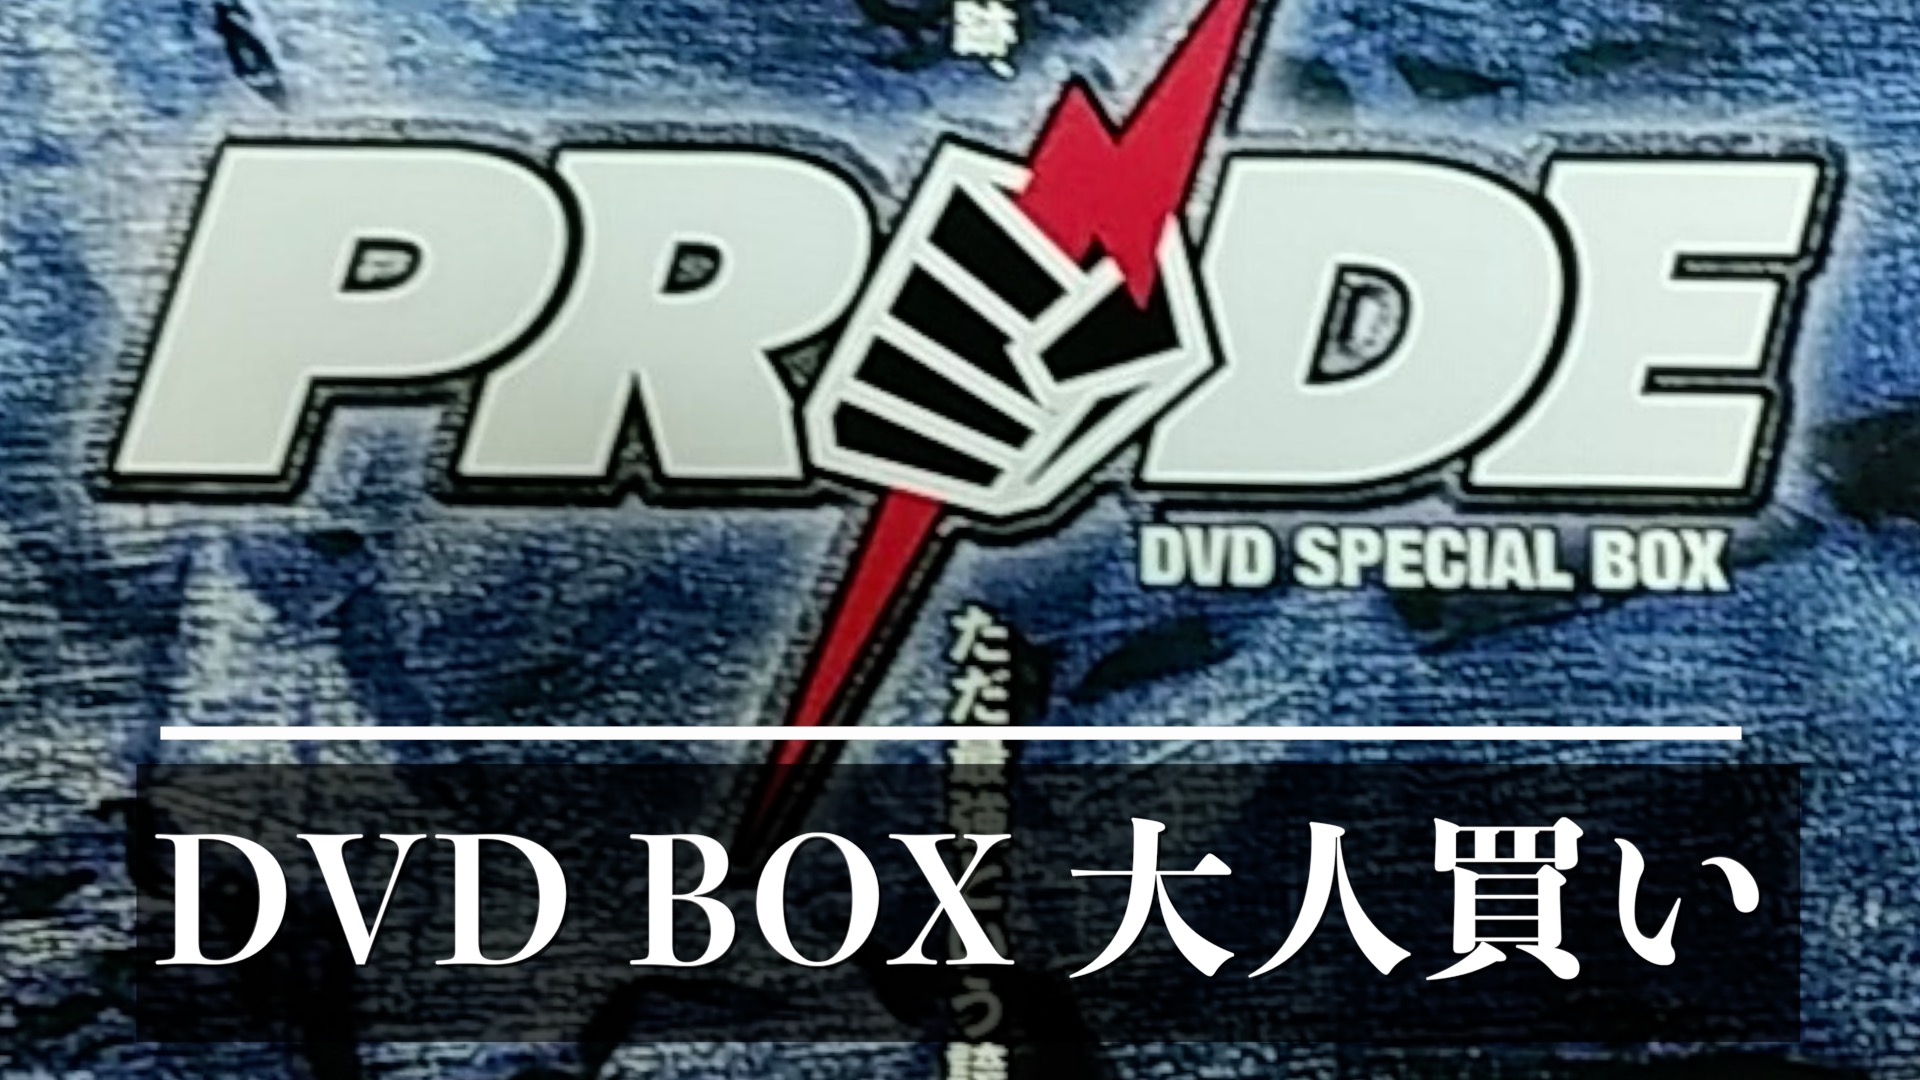 『PRIDE DVD SPECIAL BOX』のアイキャッチ画像